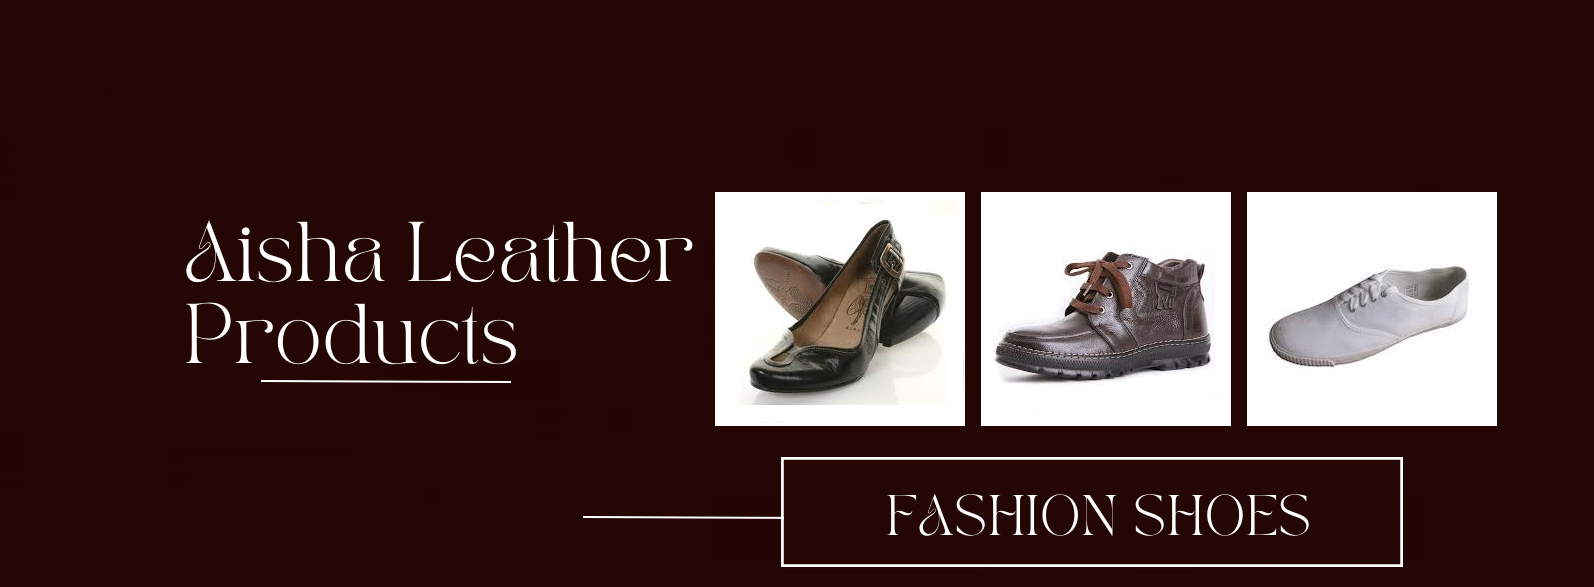 Aisha Leather Products